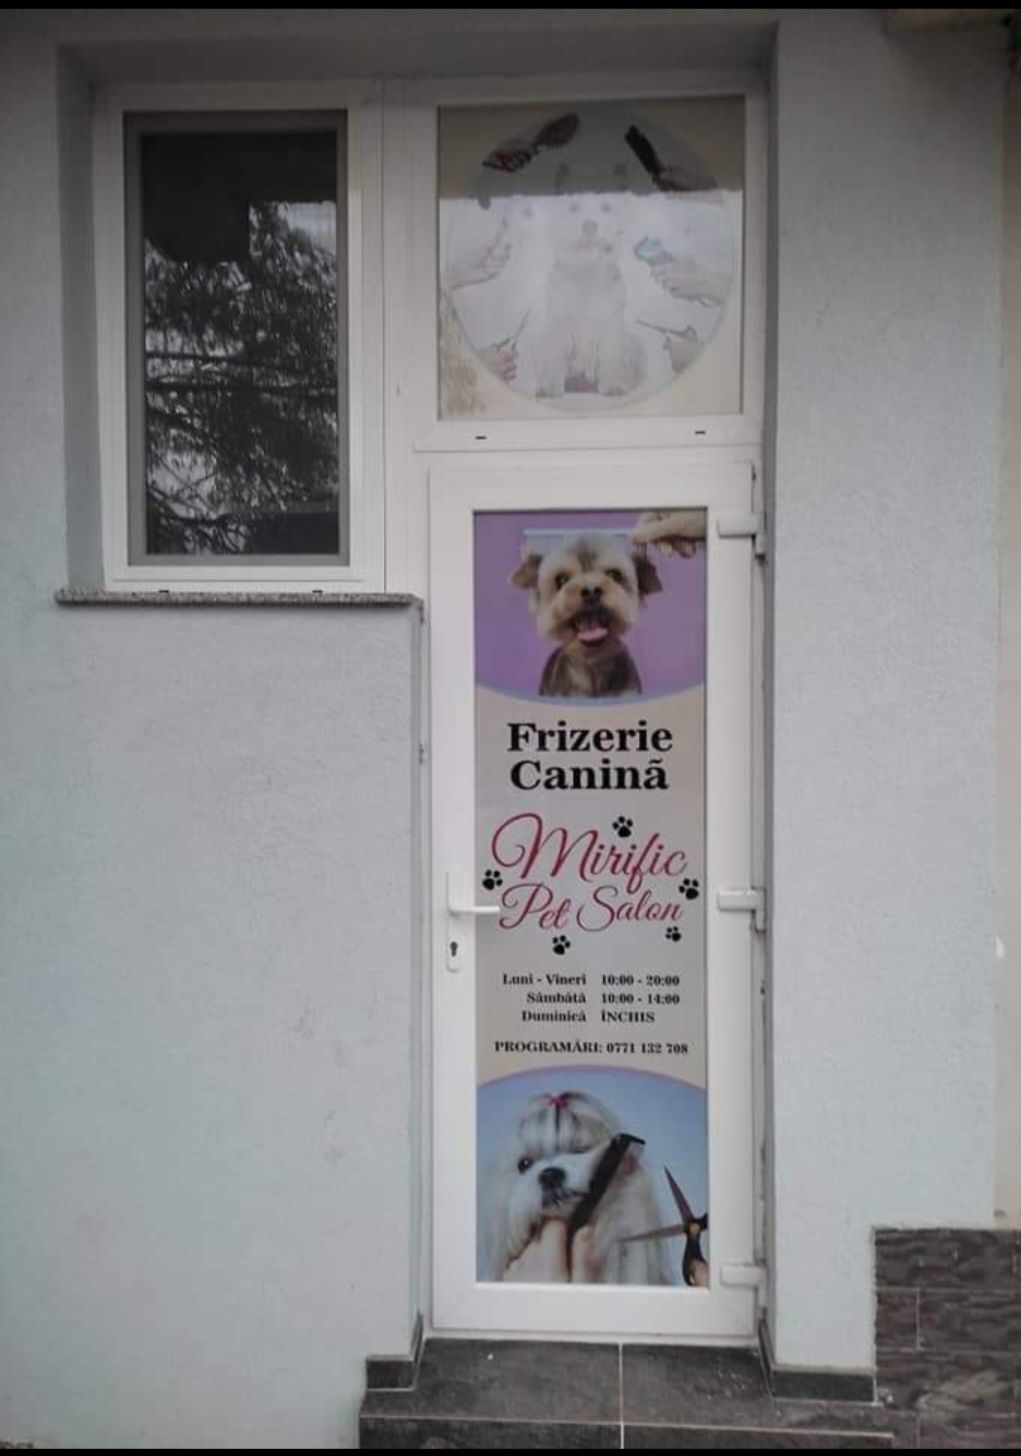 Coafura-Frizerie Canină in Sânmartin Mirific Pet Salon 80 lei